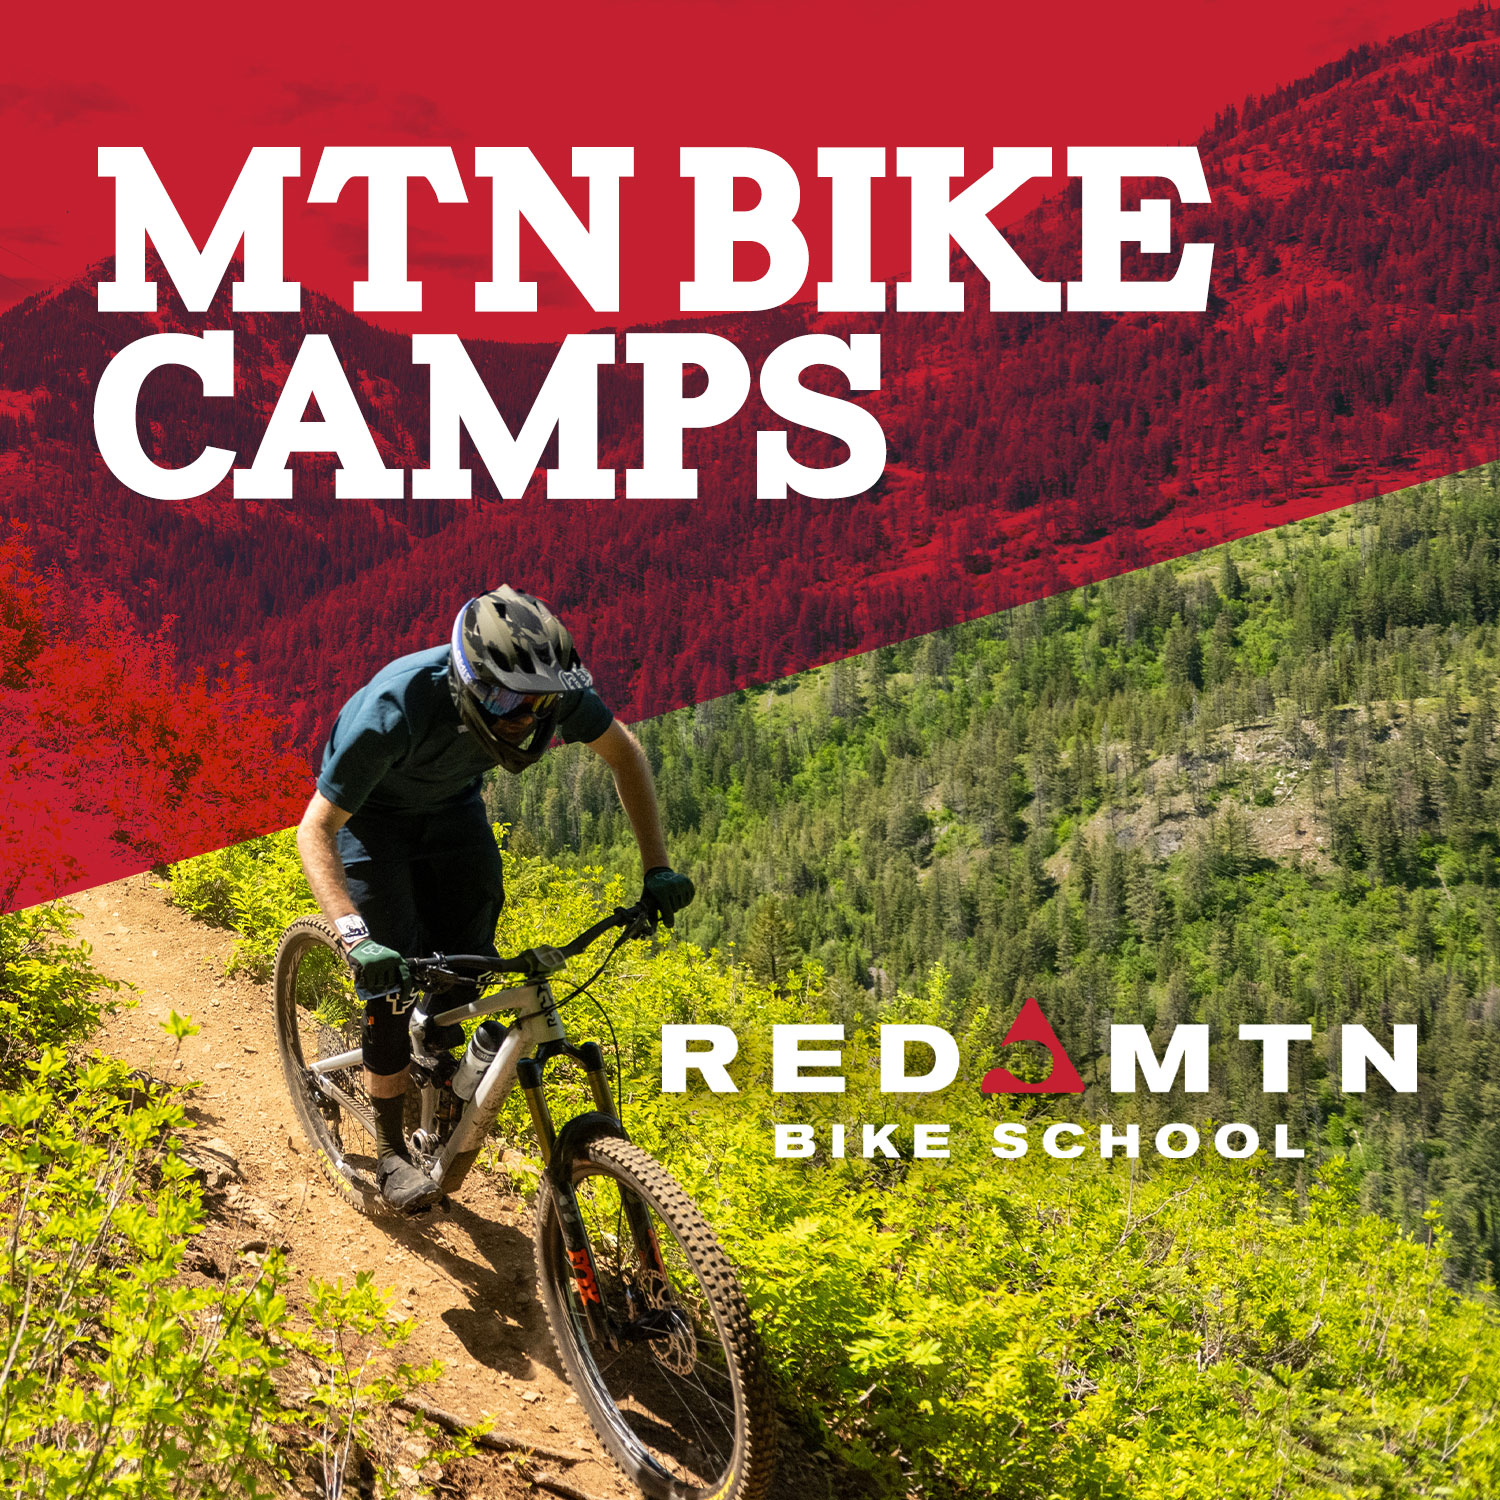 RED Mountain Bike School